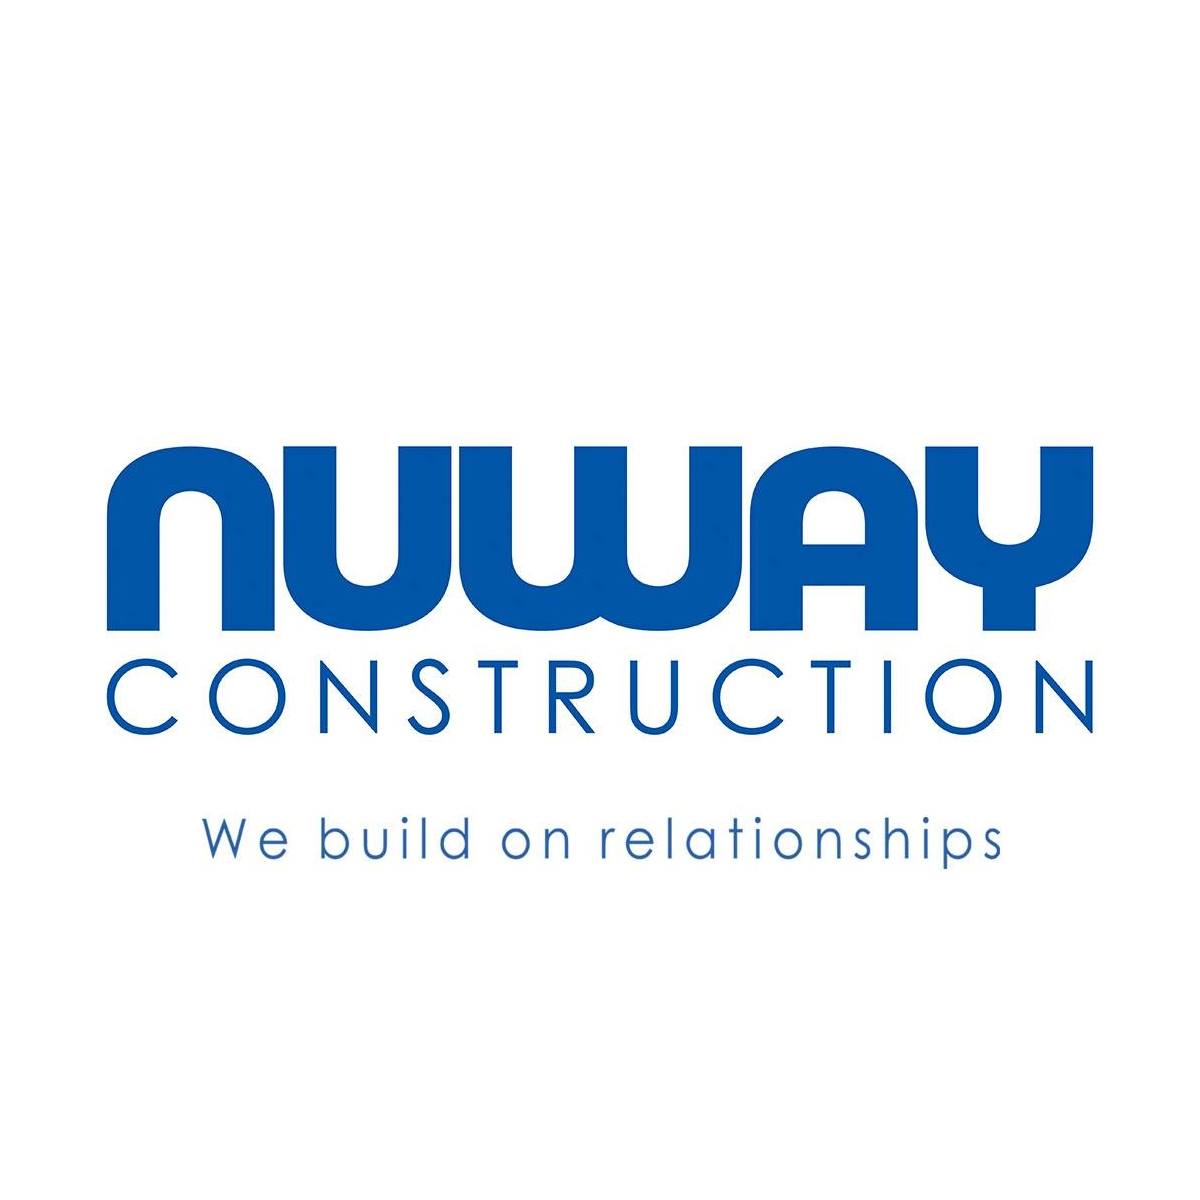 Nuway Construction